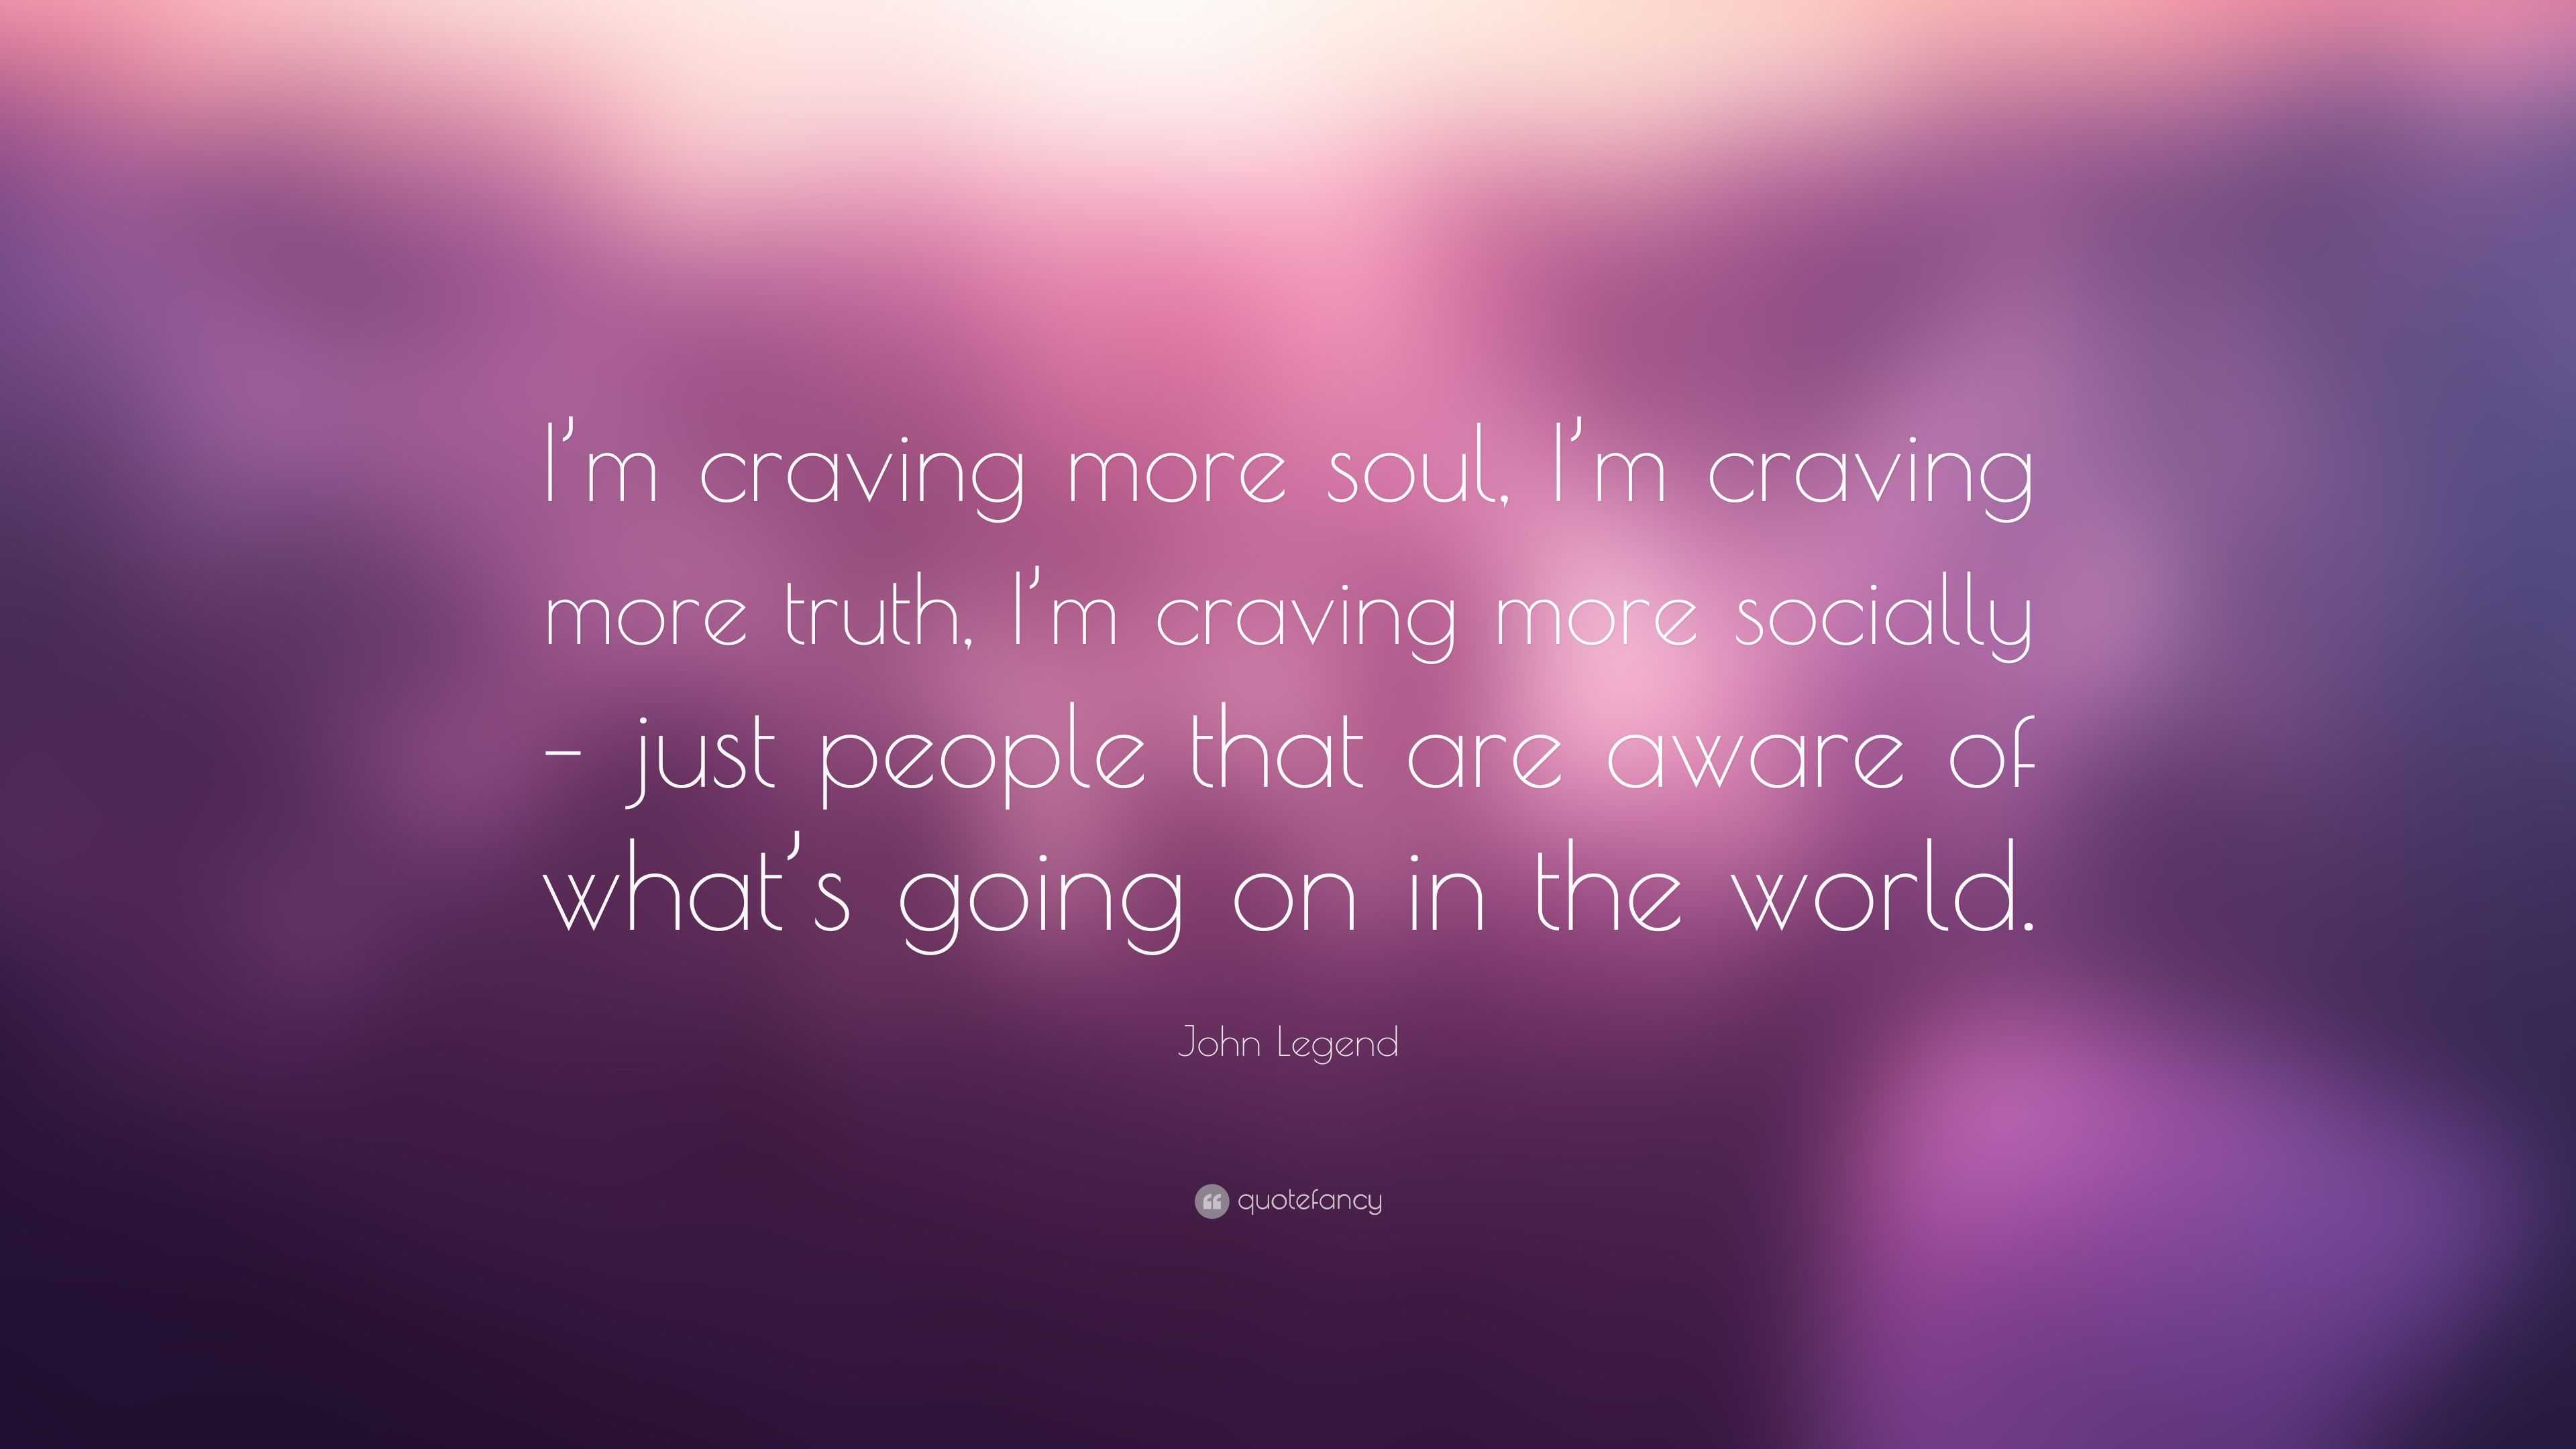 John Legend Quote: “I’m craving more soul, I’m craving more truth, I’m ...